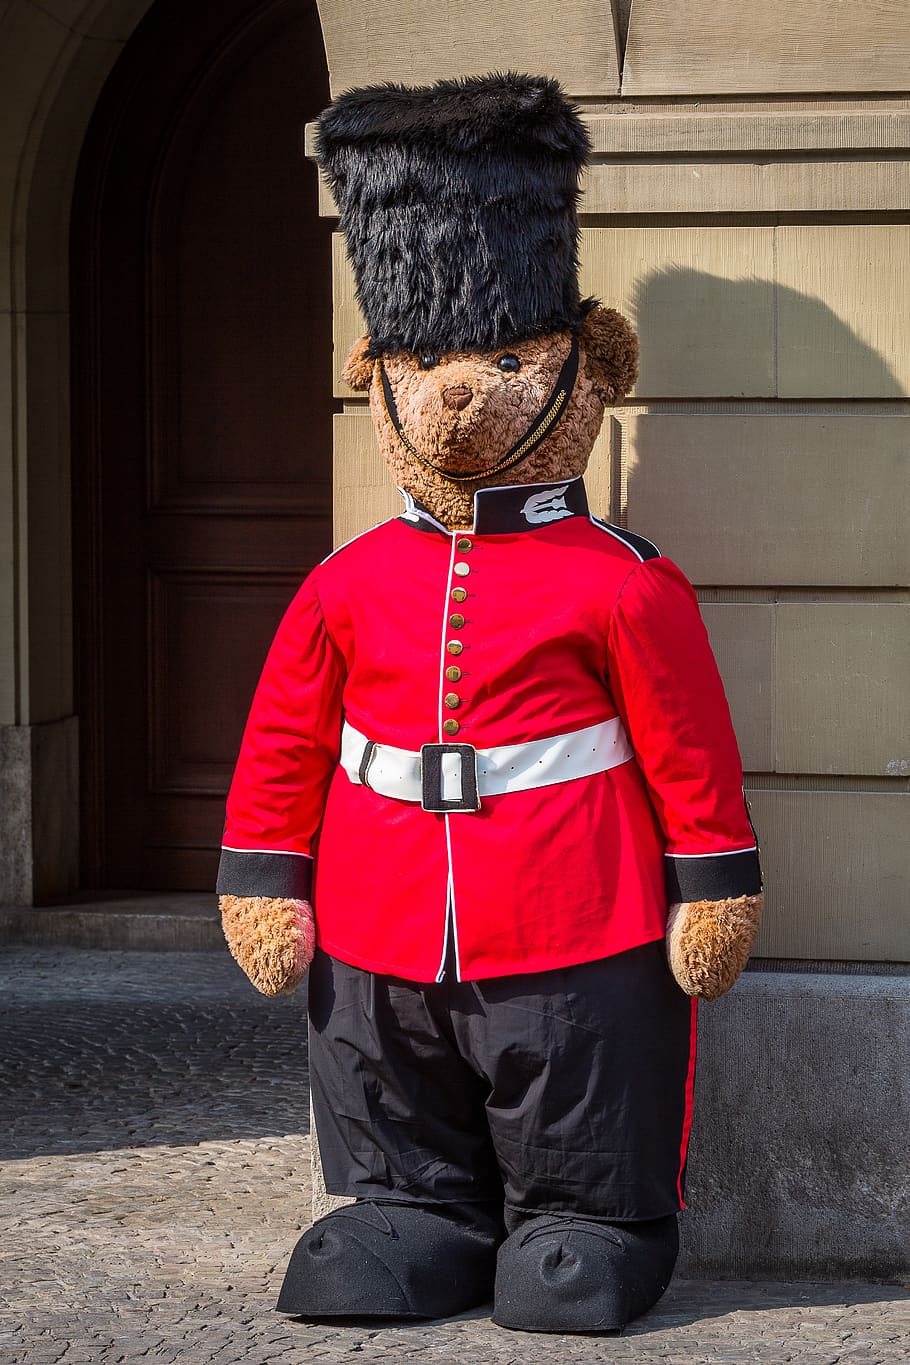 grenadier guards, london, united kingdom, soldier, furry teddy bear, HD wallpaper